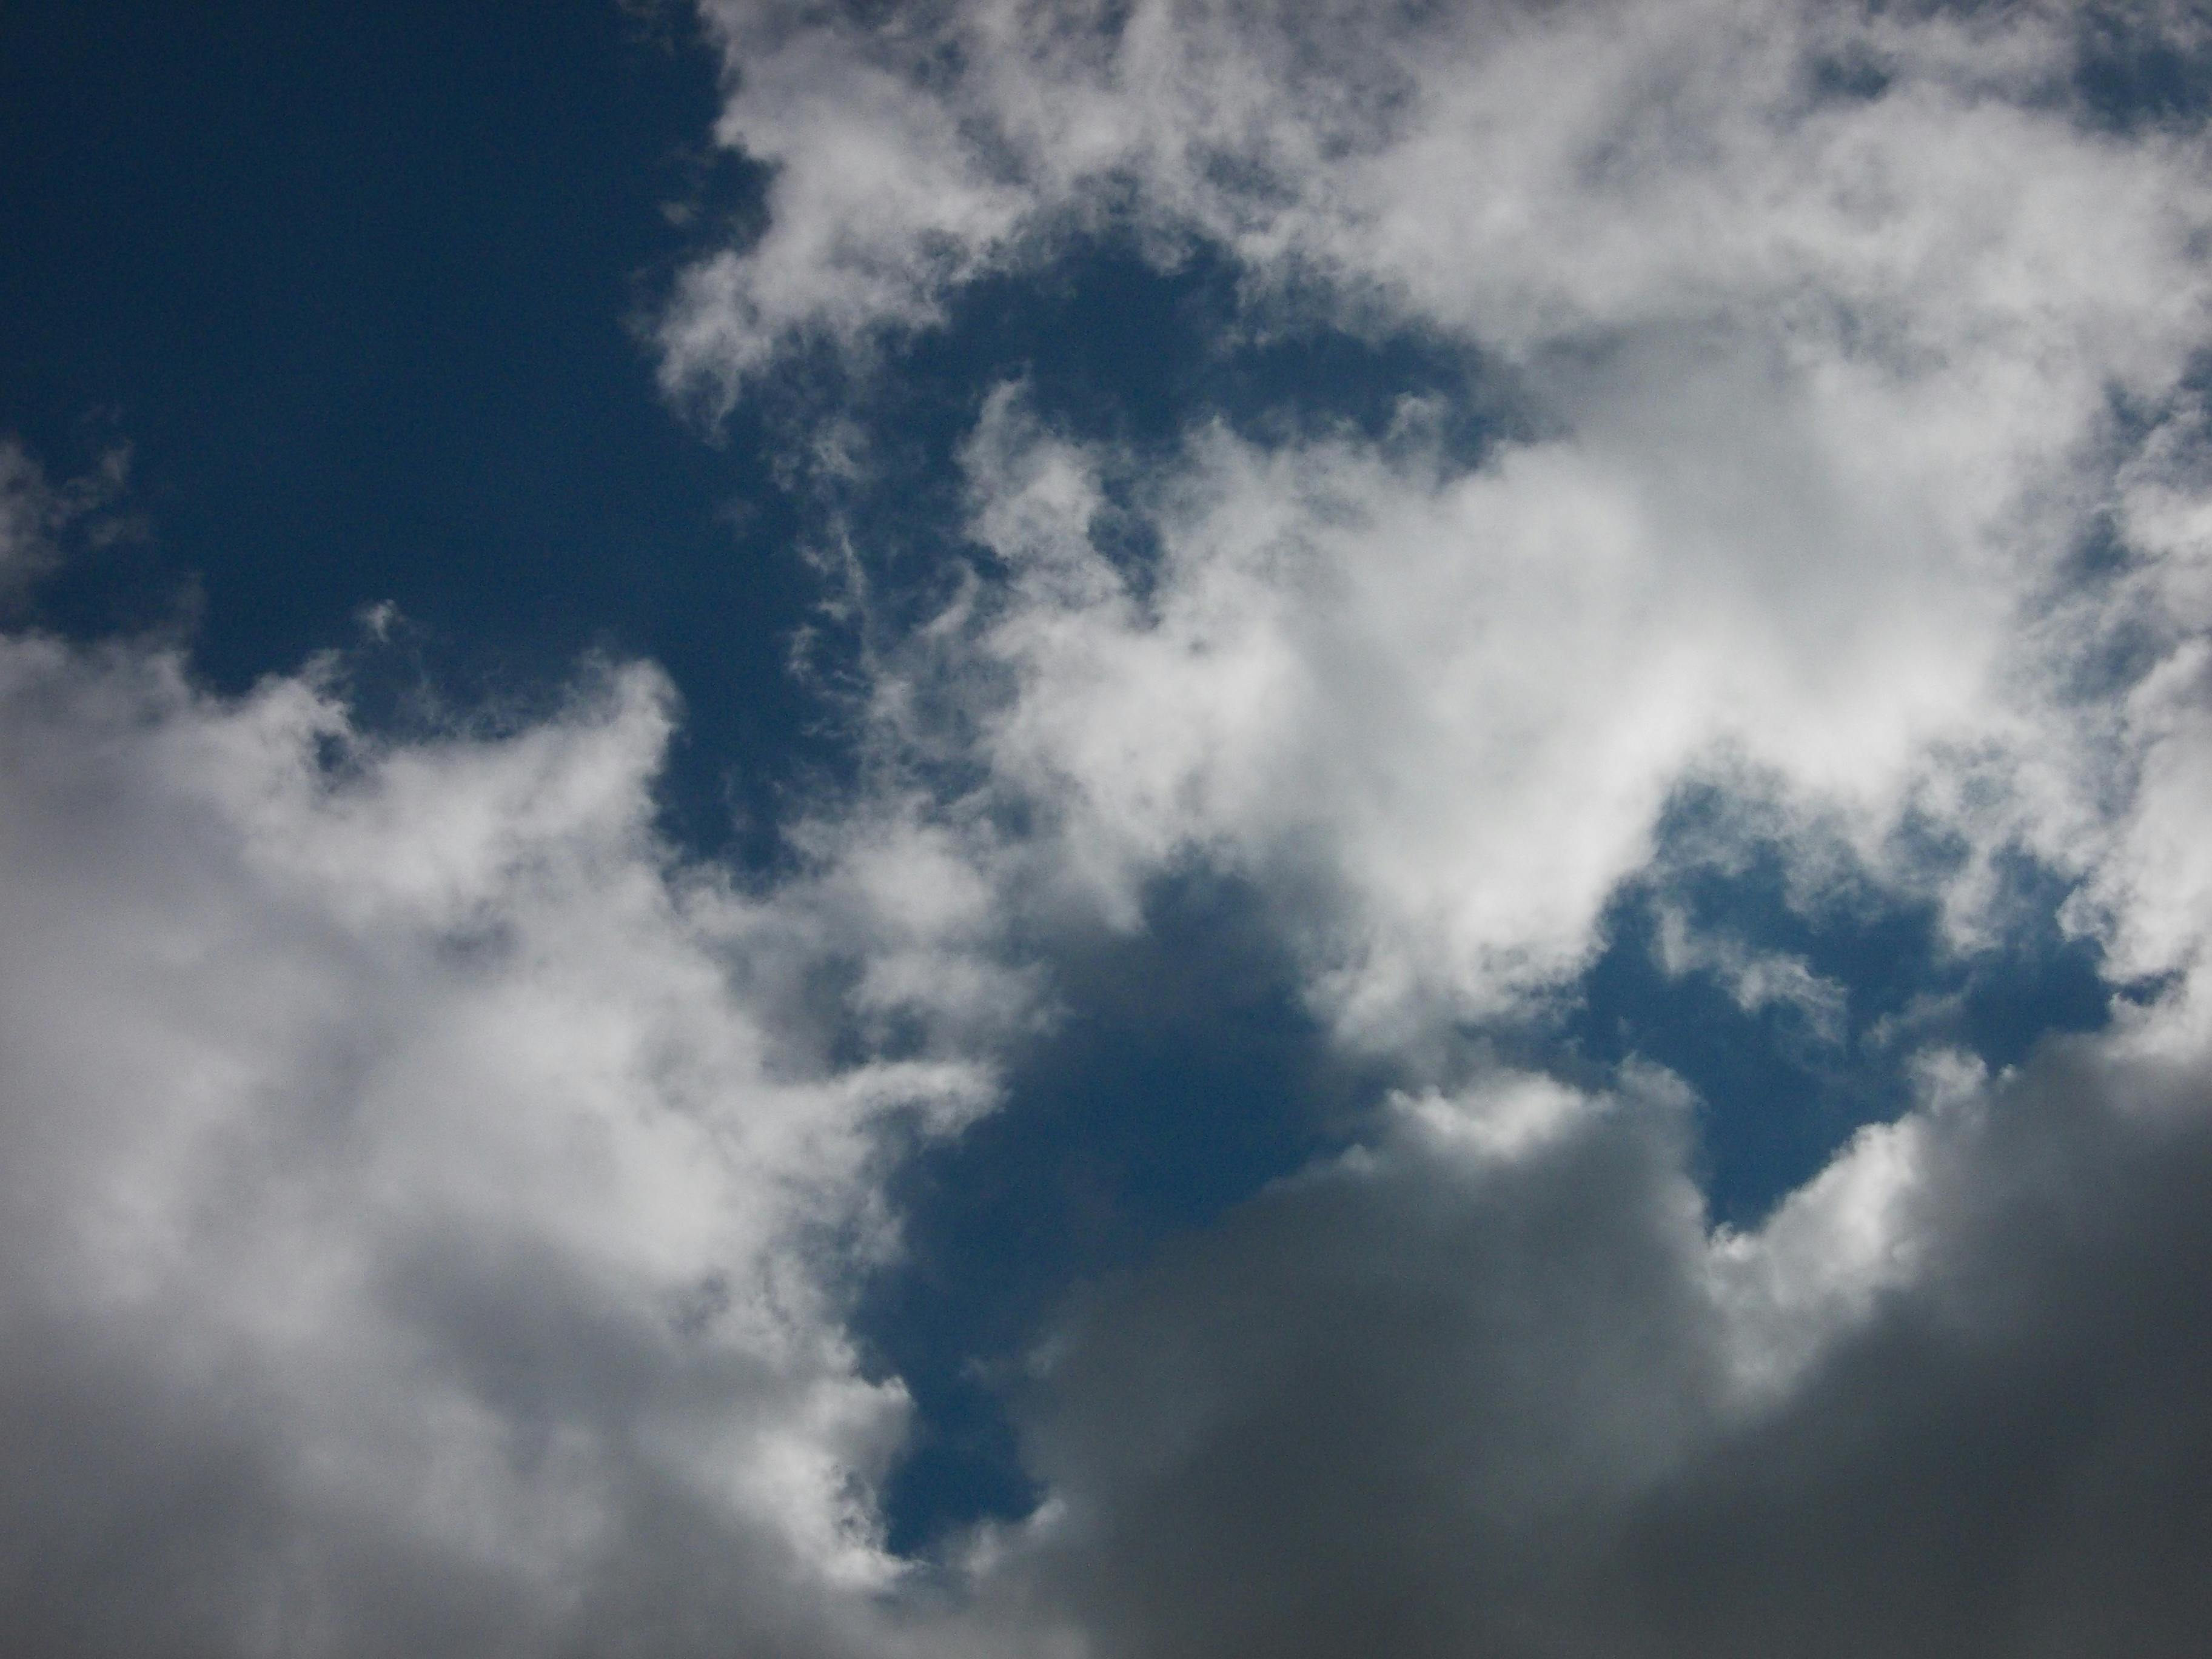 Free stock photo of clouds dark, clouds day spa clouds desmo, clouds def